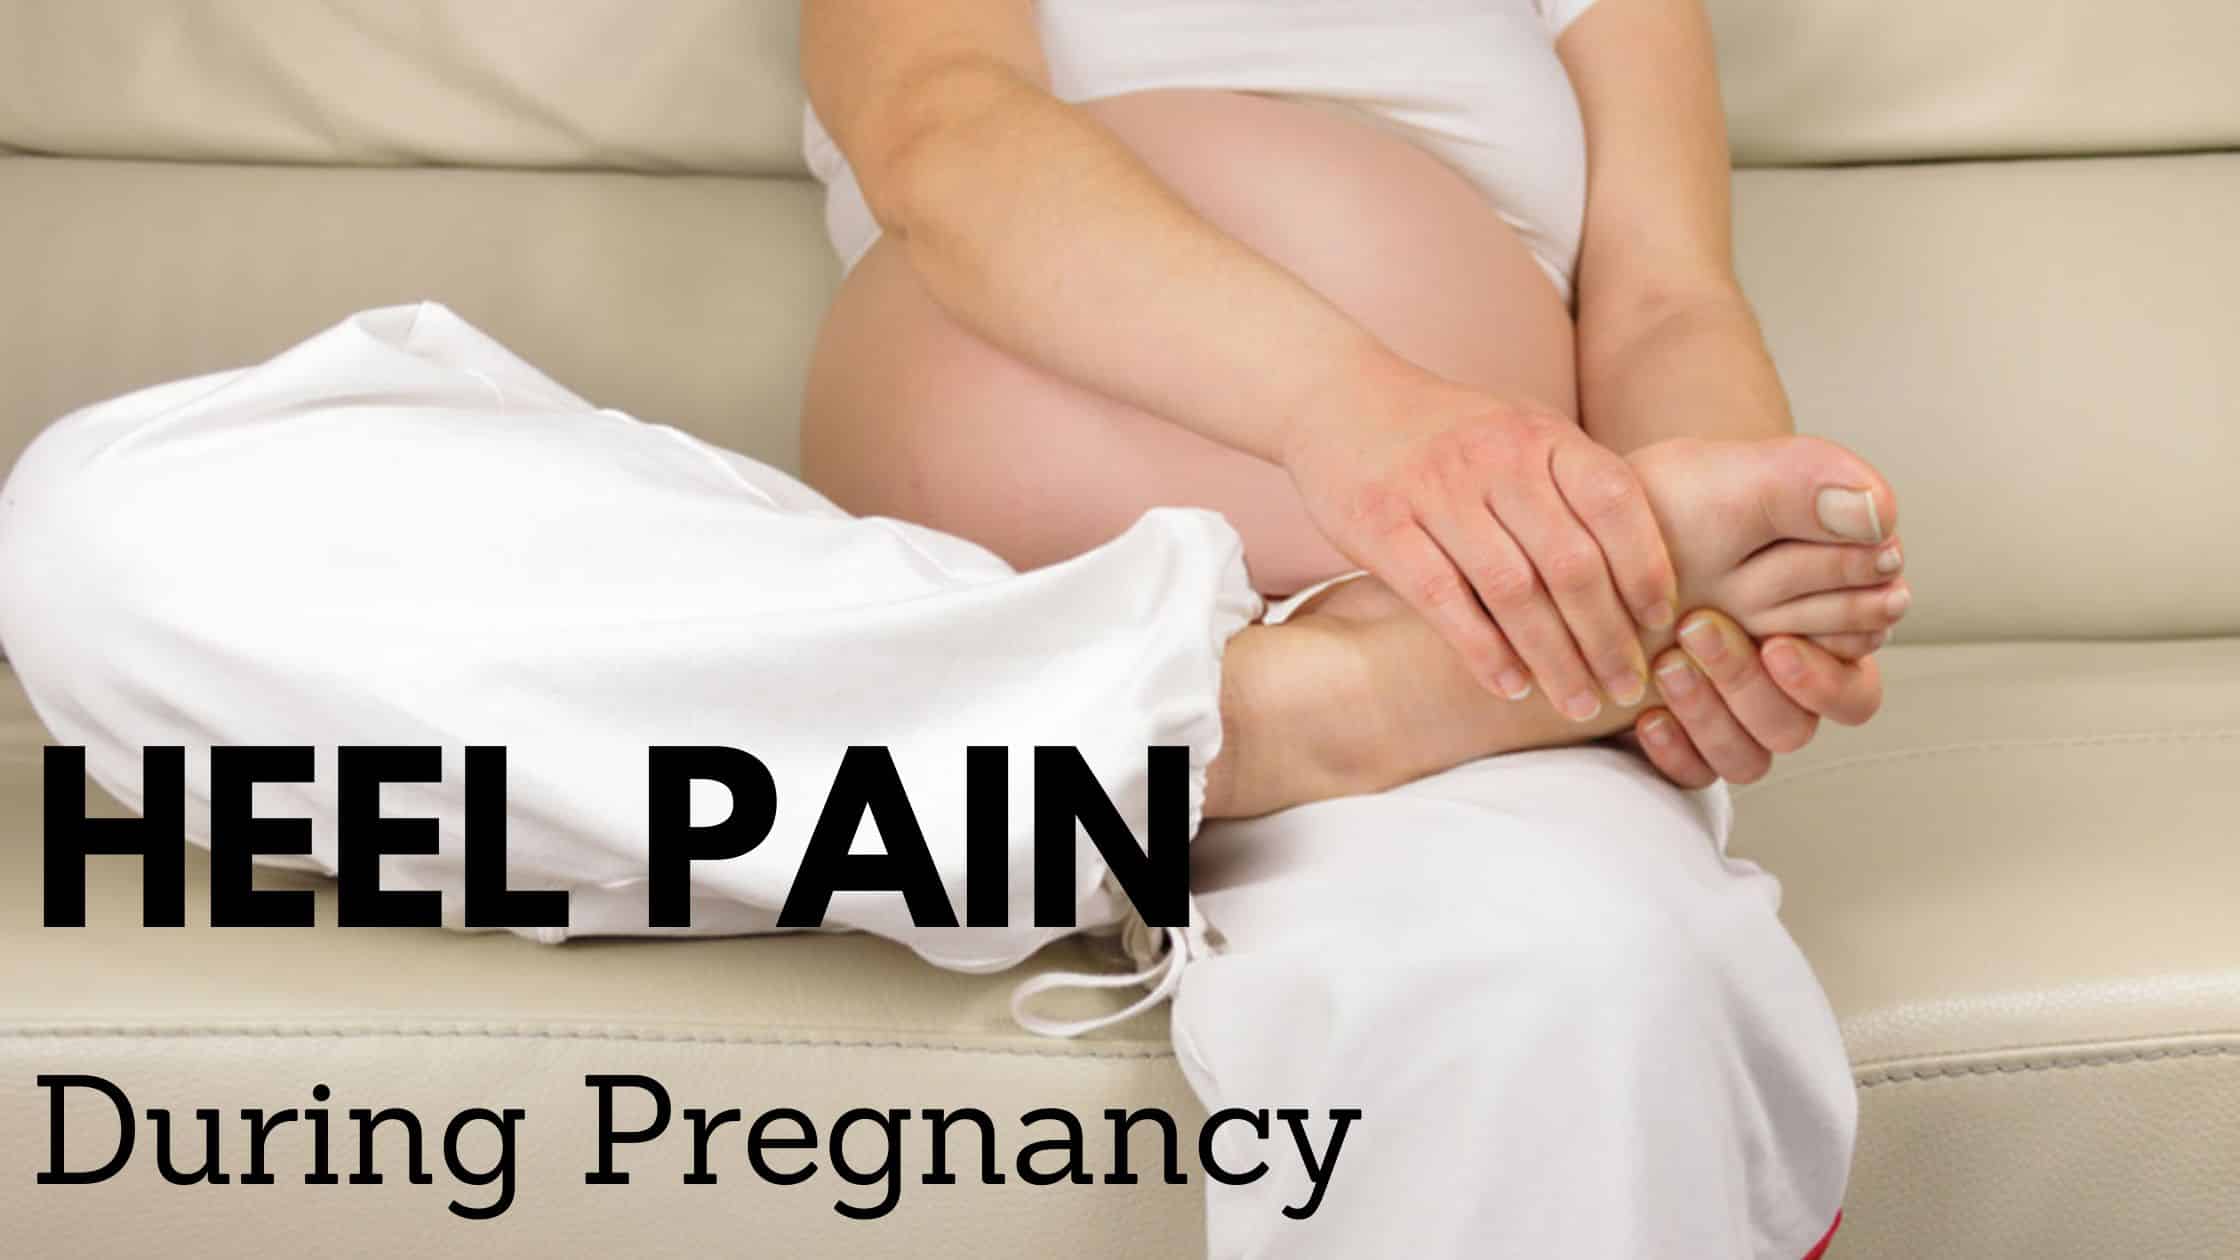 Prevent Foot Pain in Pregnancy | Seattle Podiatrist - YouTube